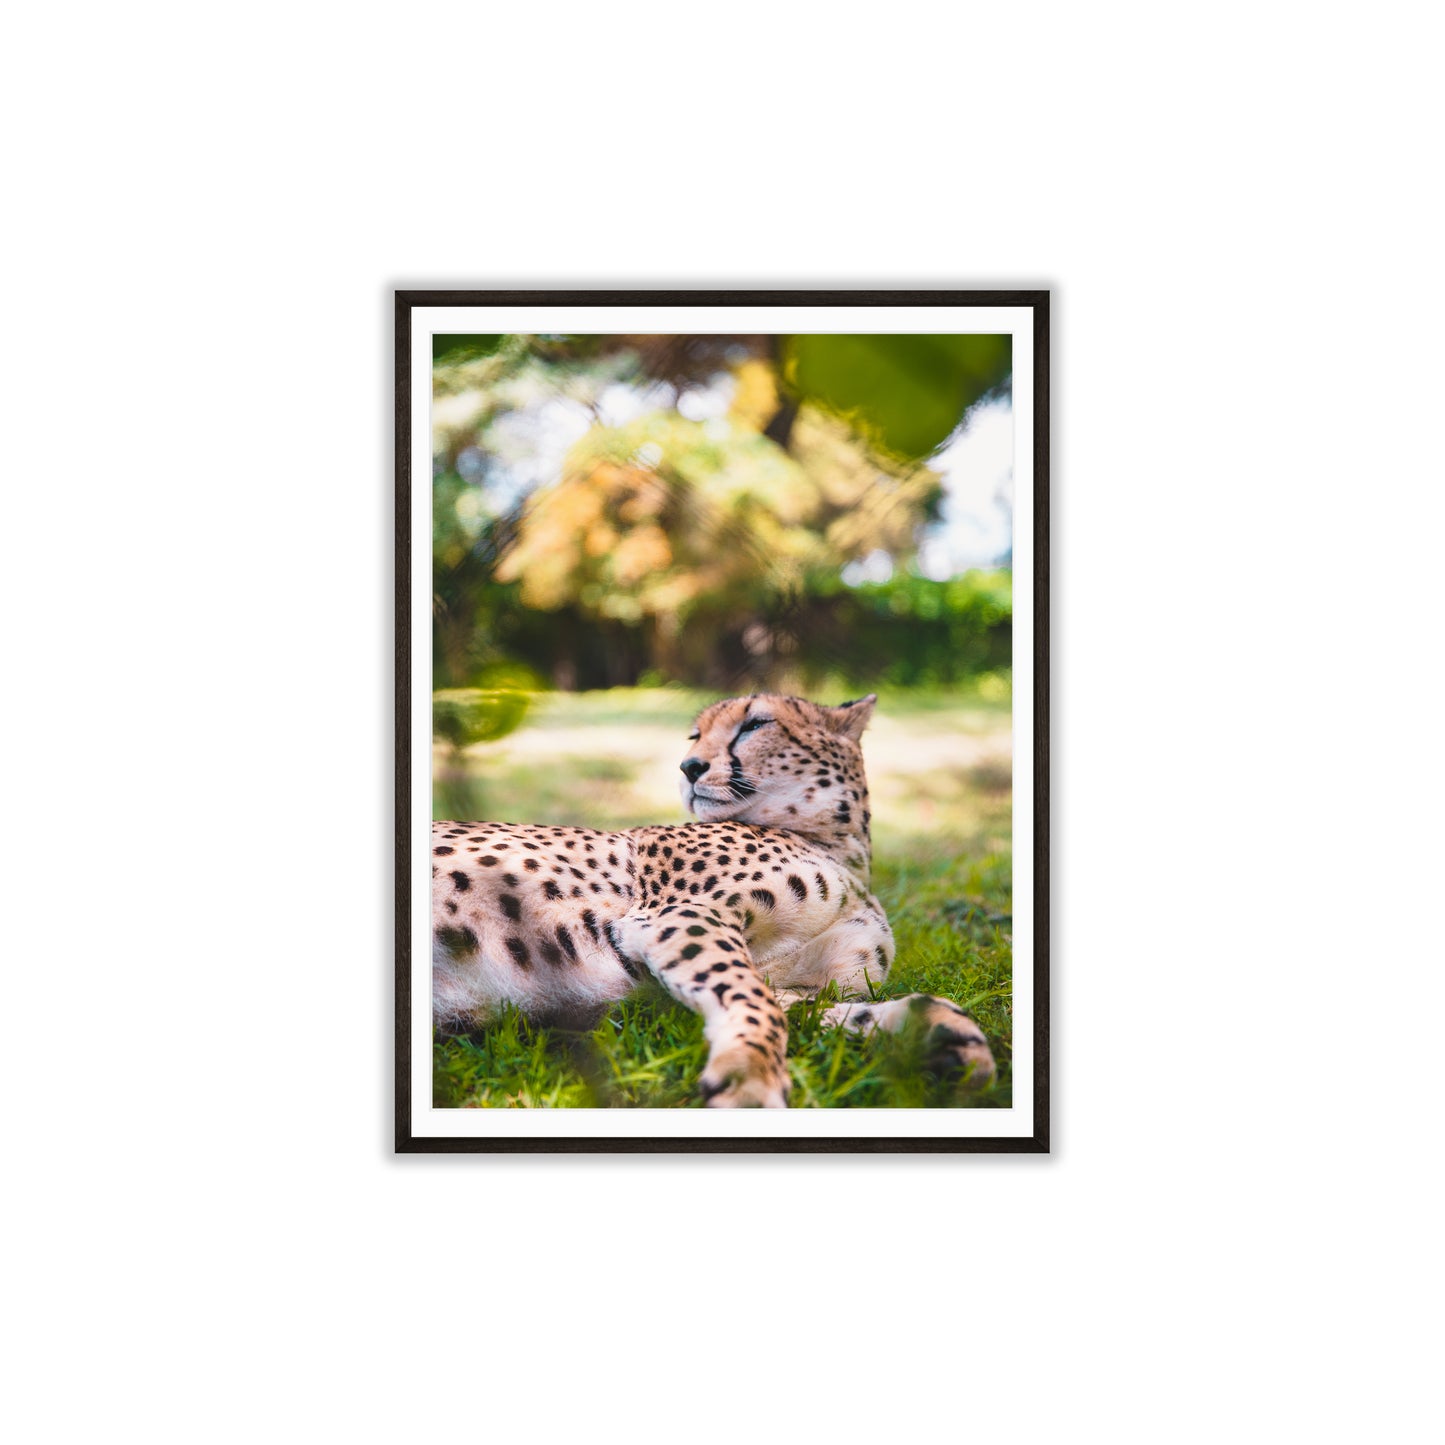 Leopard of the Grasslands